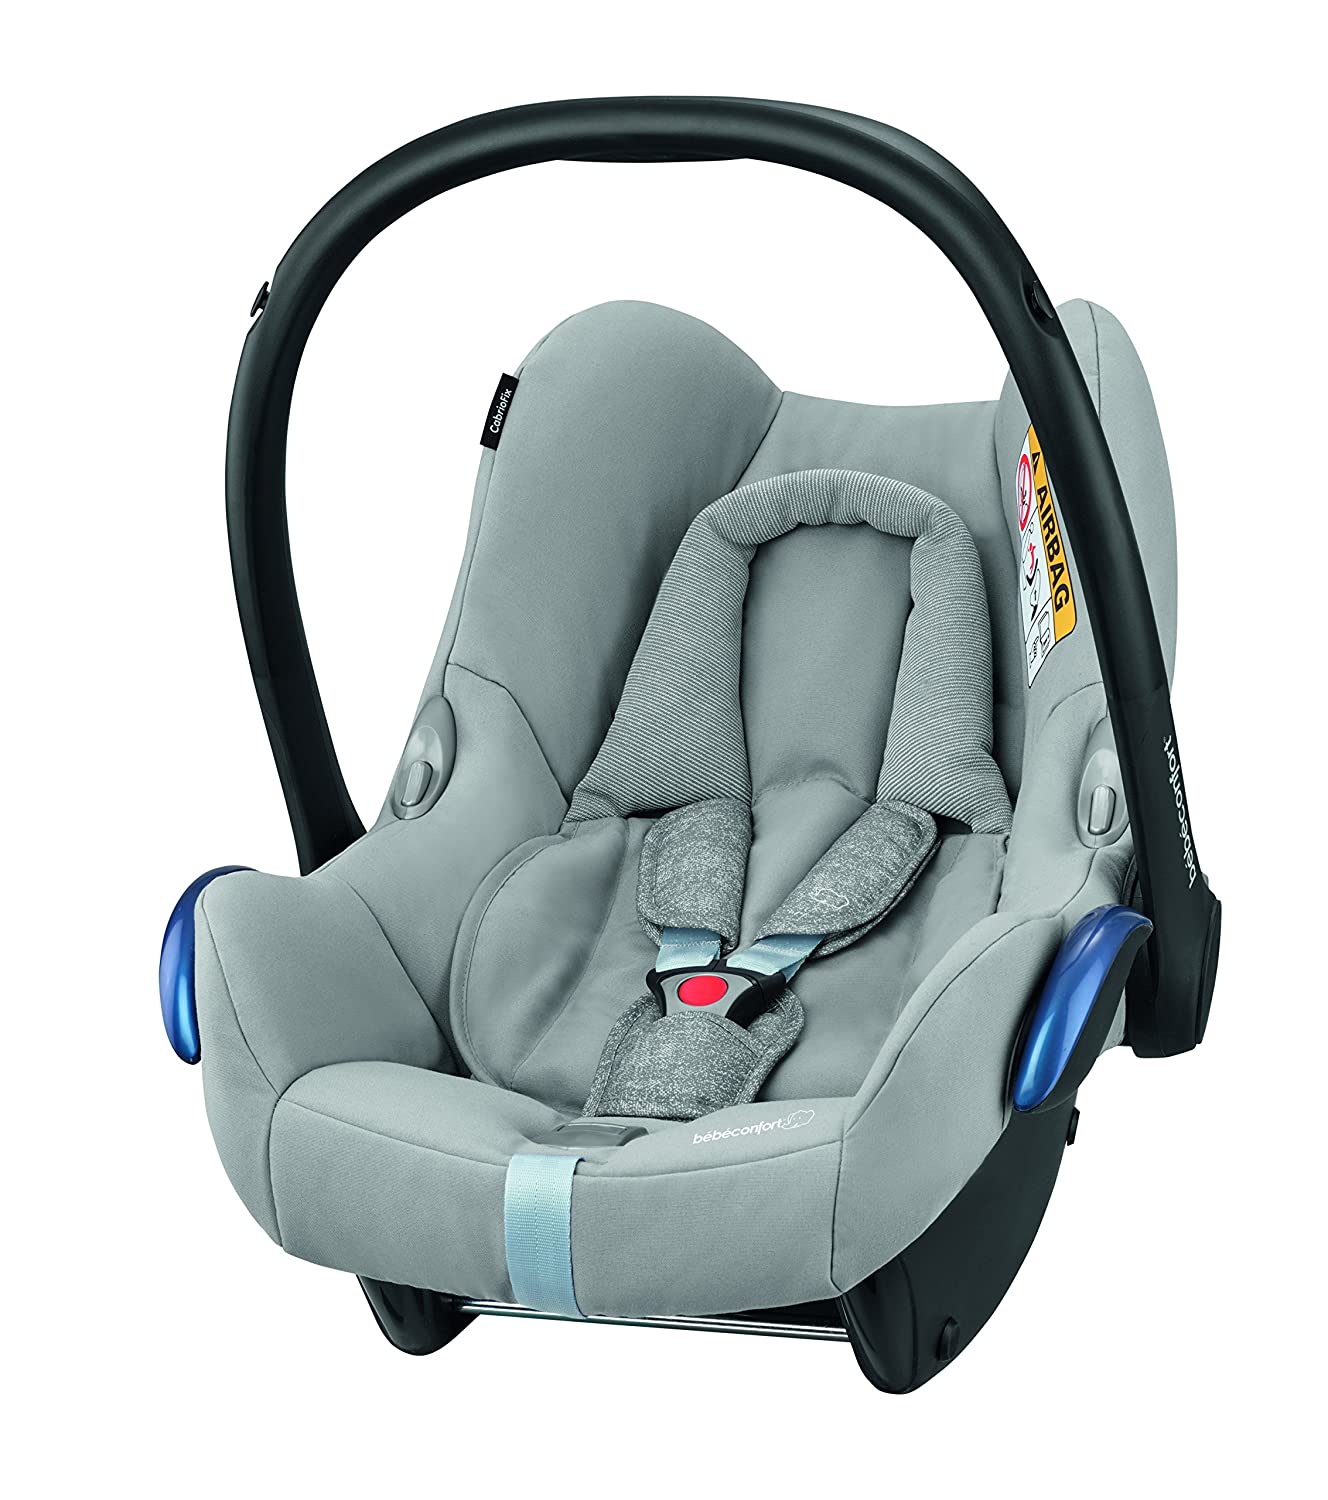 Bébé Confort Cabriofix Car Seat for Children Aged 0 to 12 Months Nomad Grey